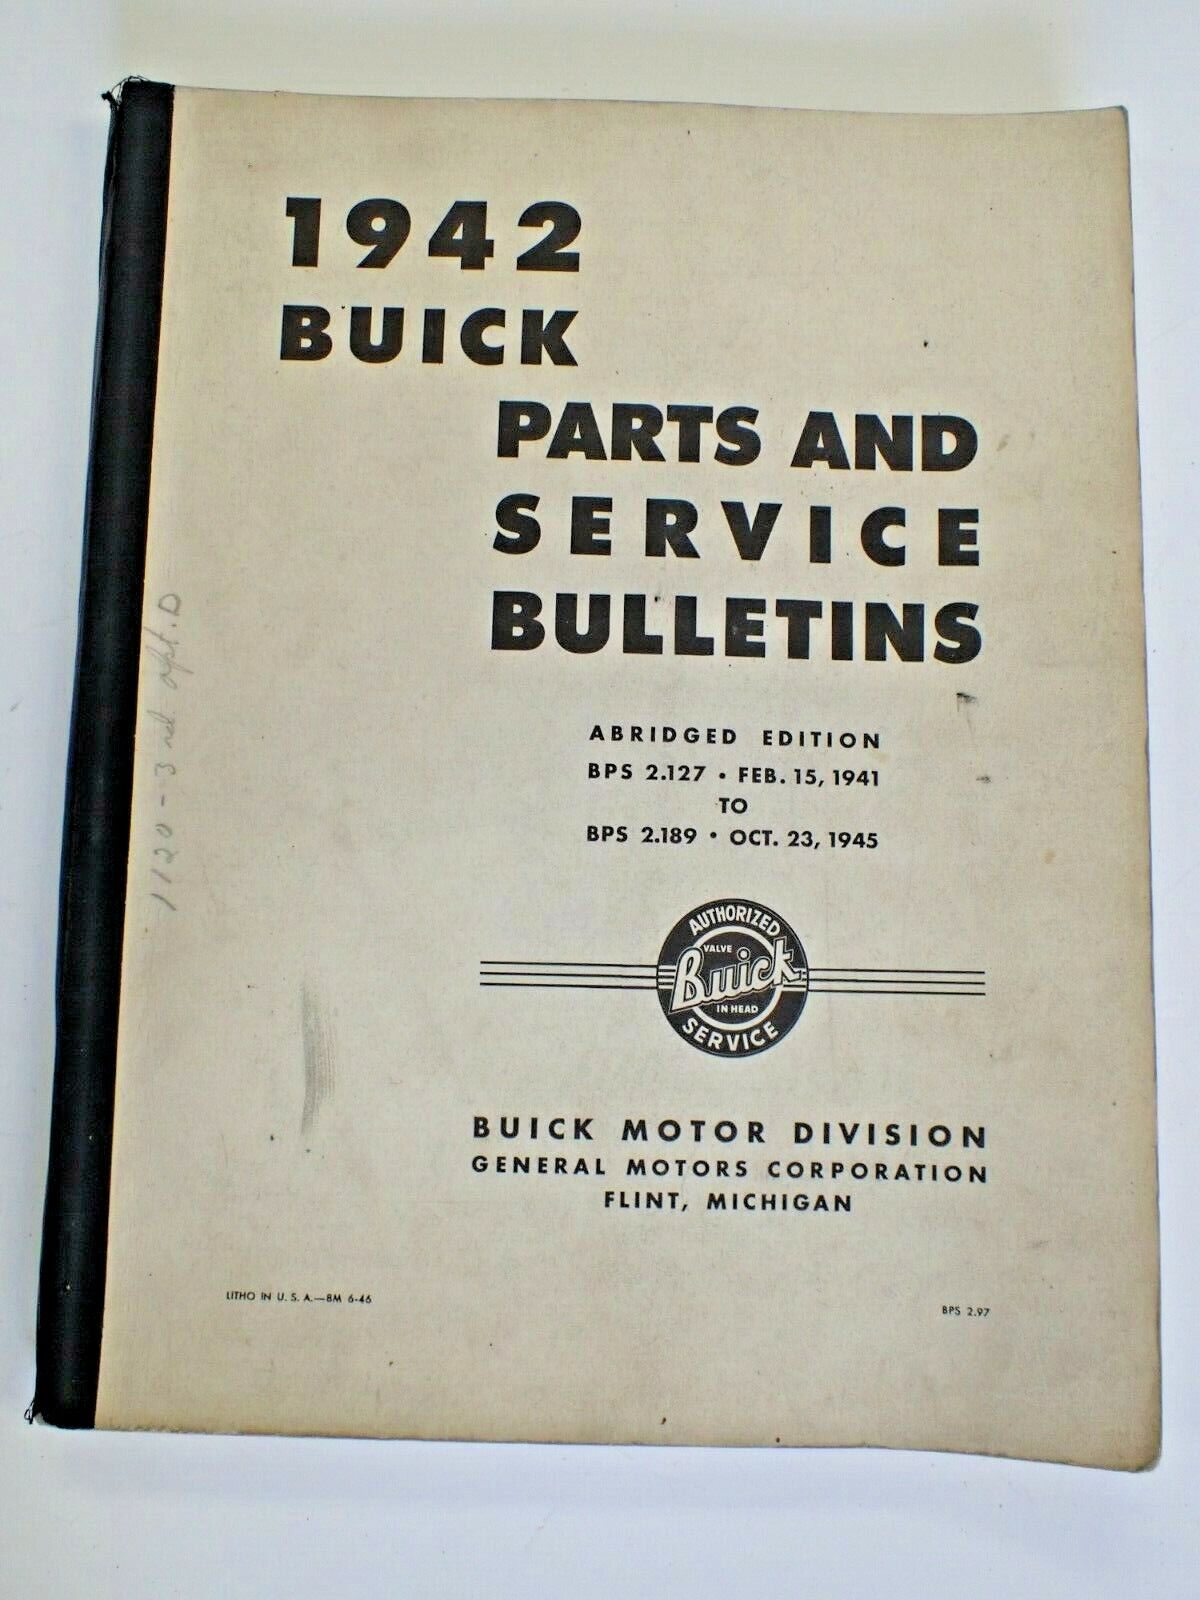 Original 1942 Buick Parts and Service Bulletins Manual Booklet 